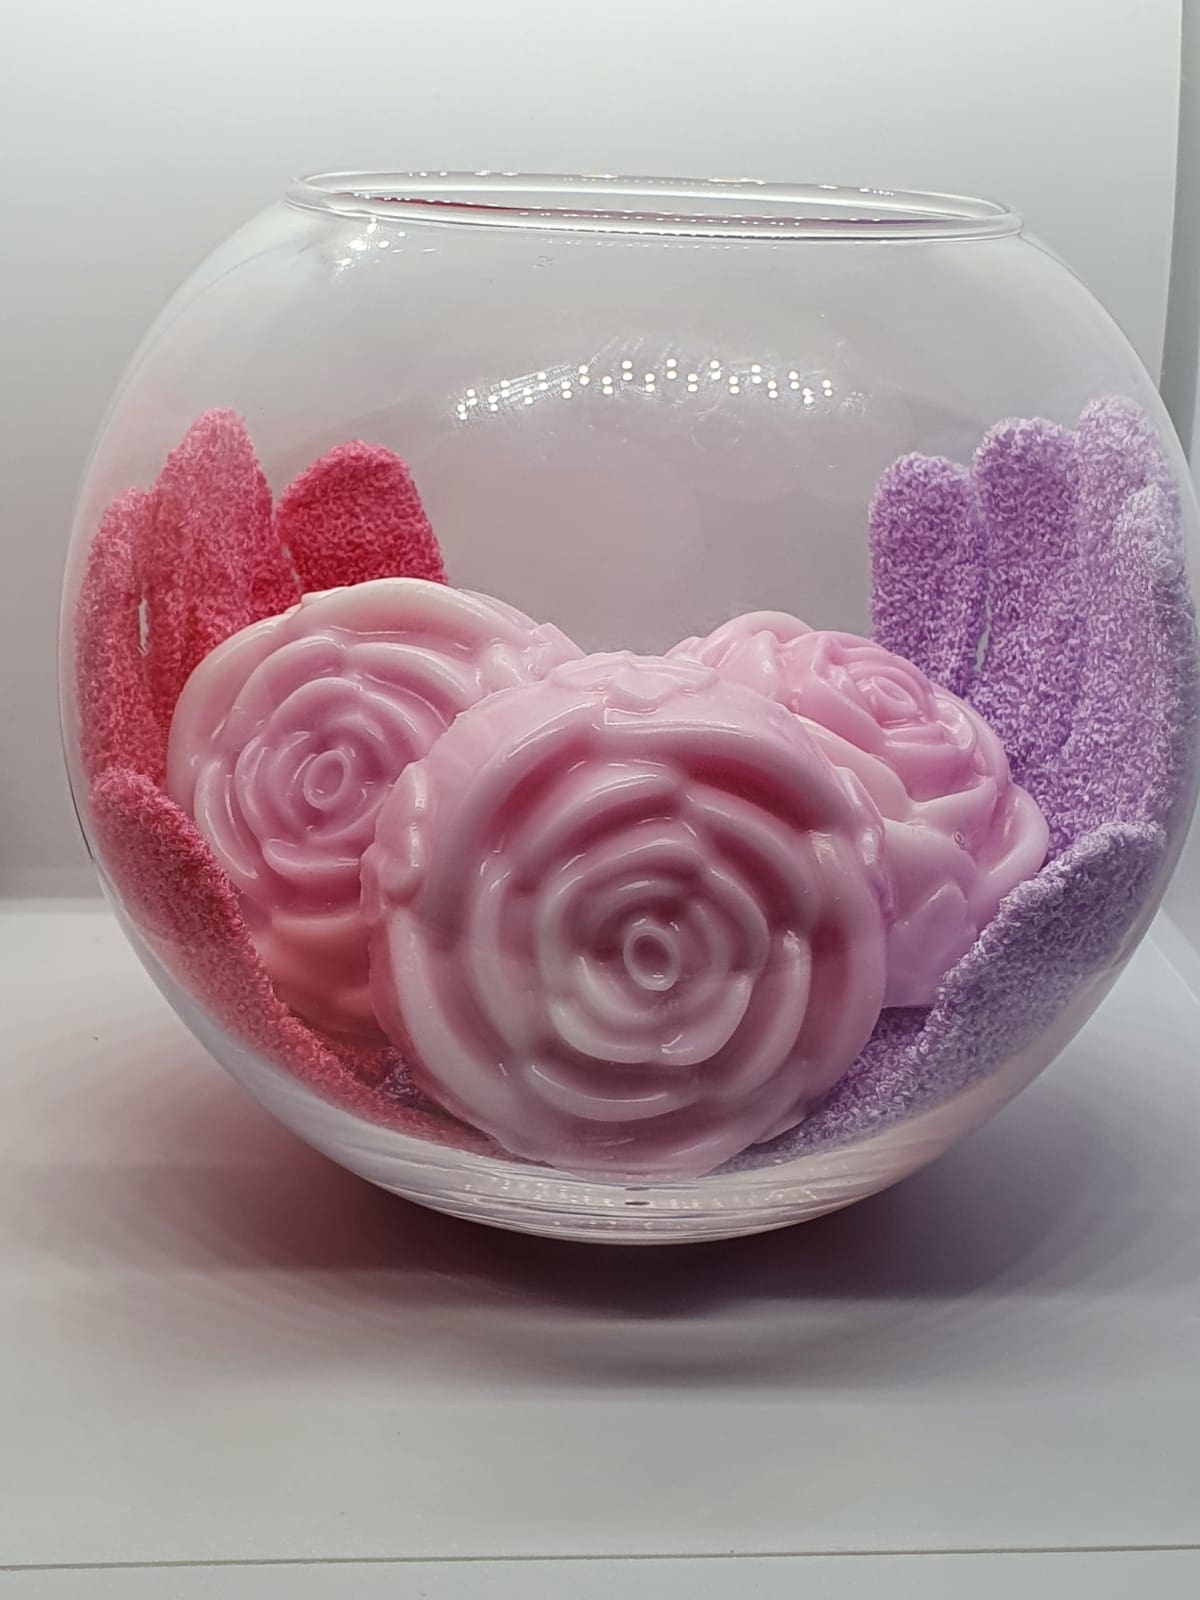 Natural Homemade Rose Soap